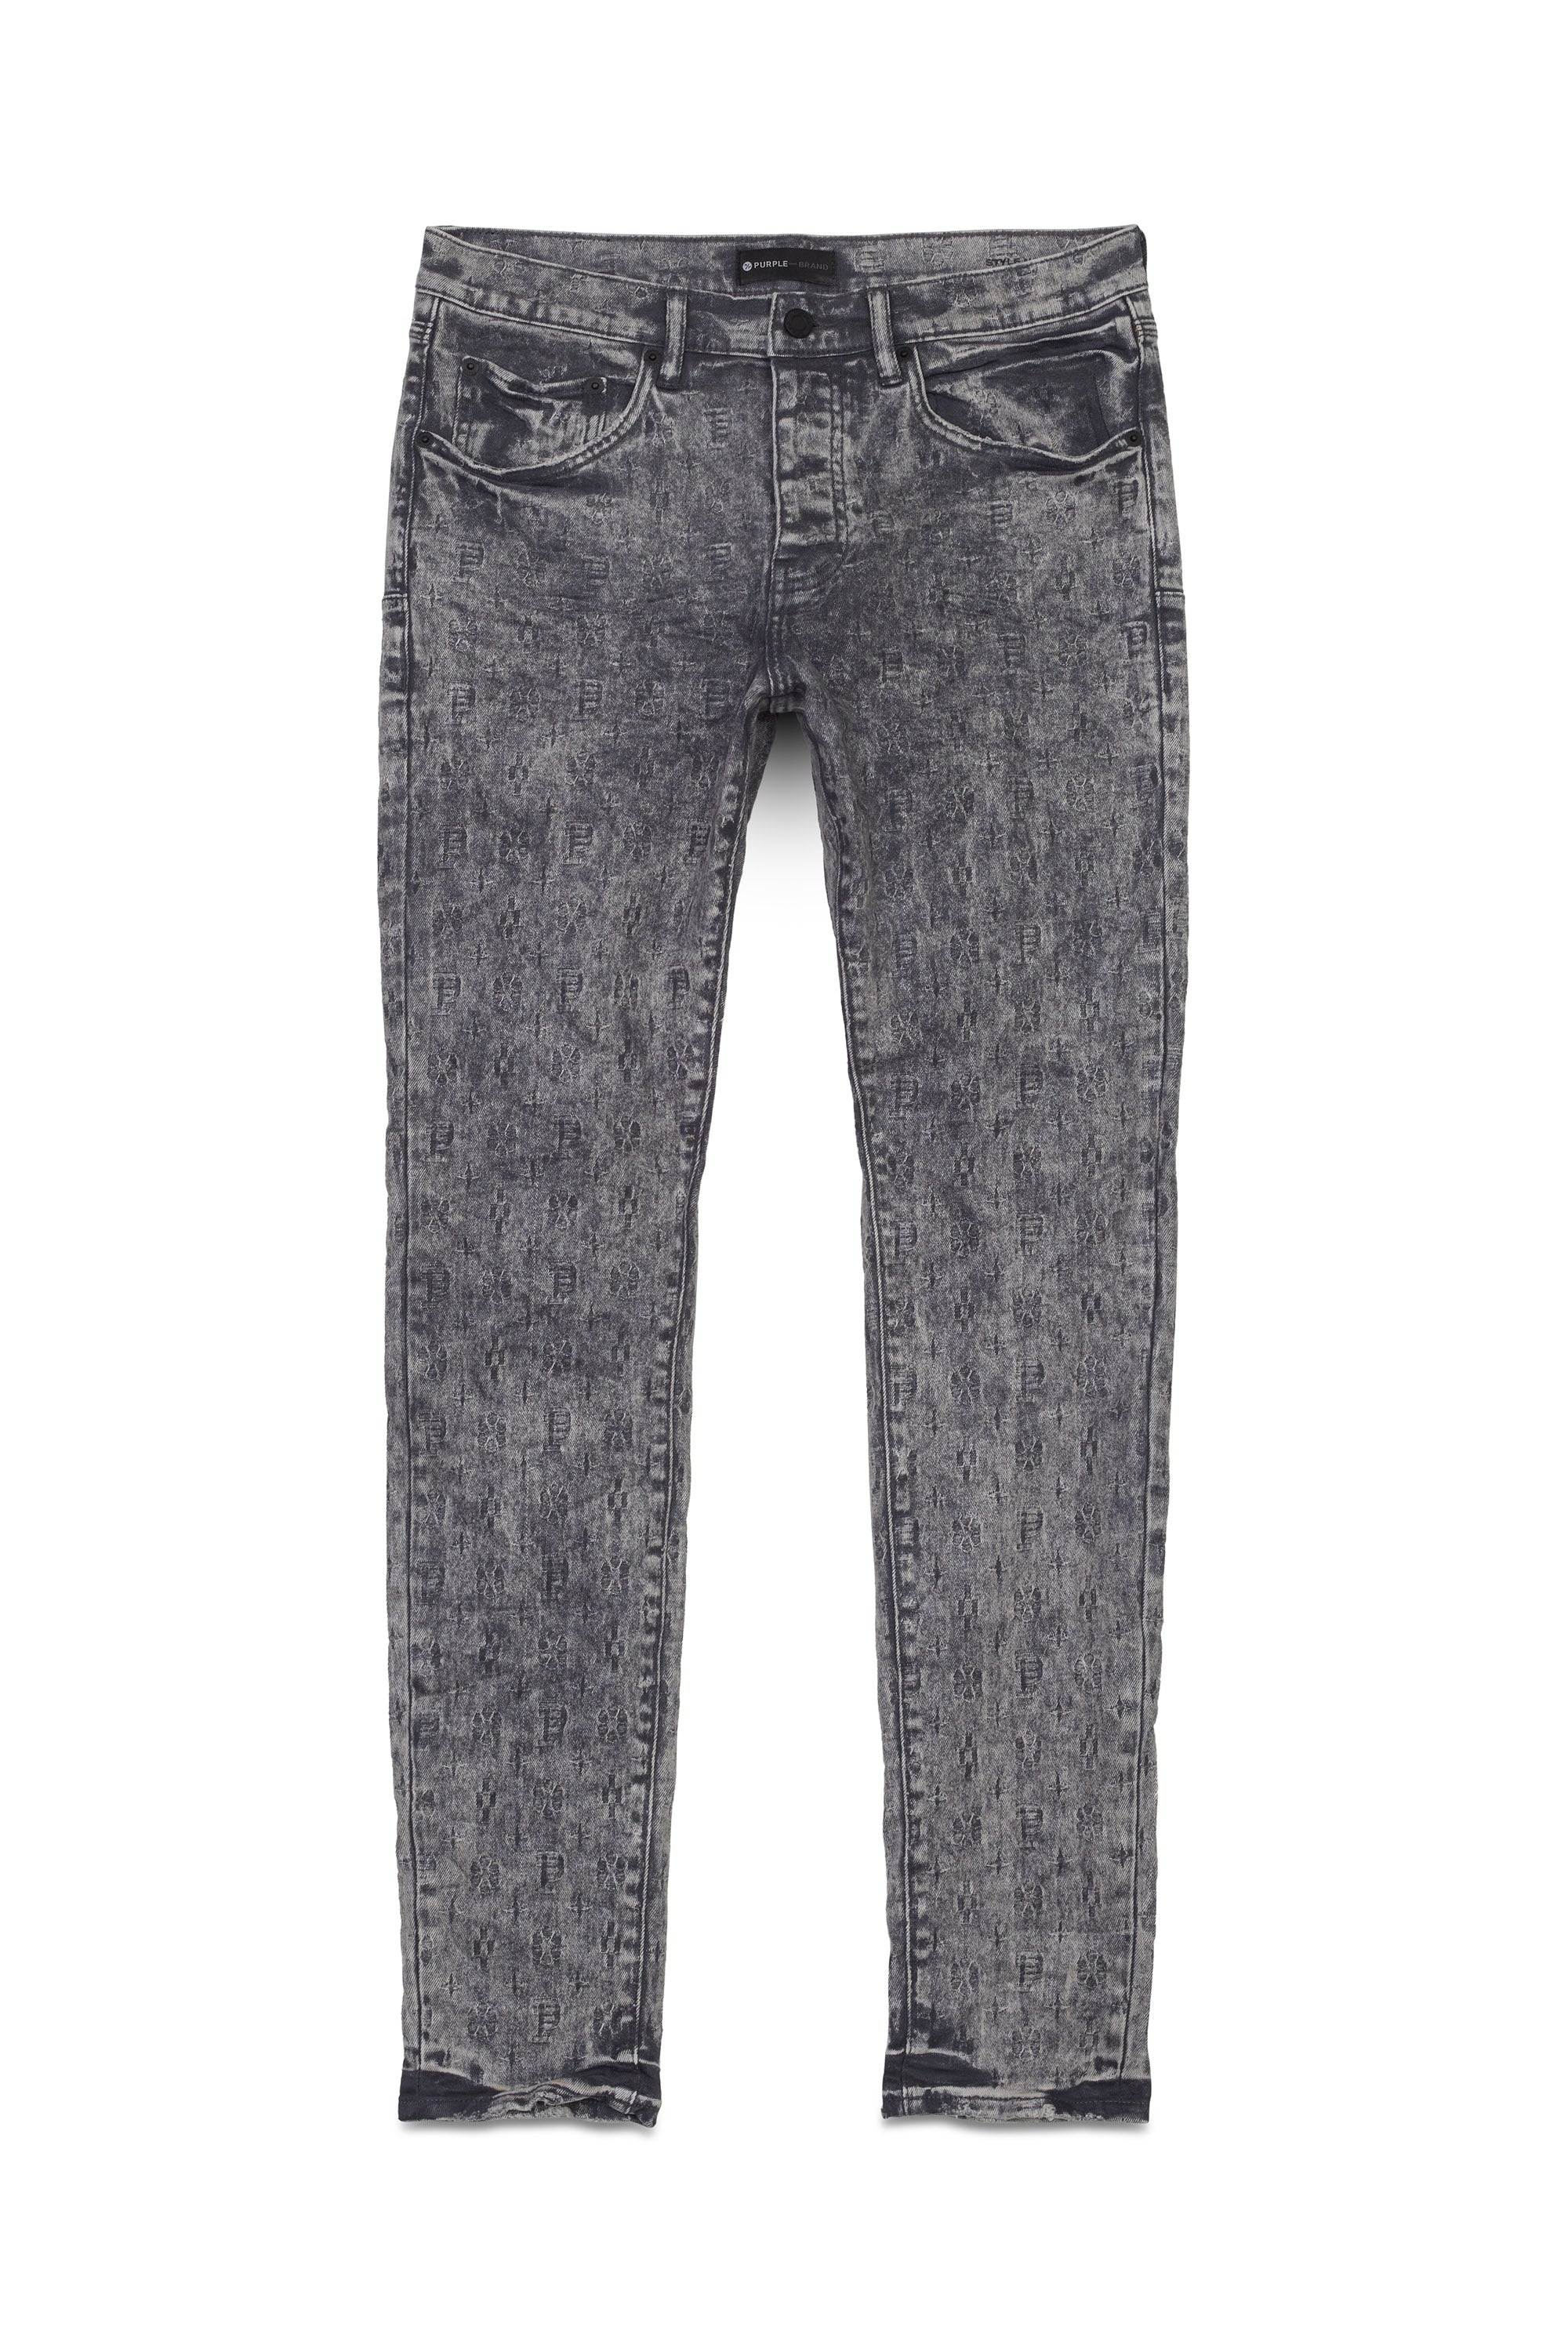 Purple Brand Jeans P001 Low Rise Skinny Black Raw – BLVD